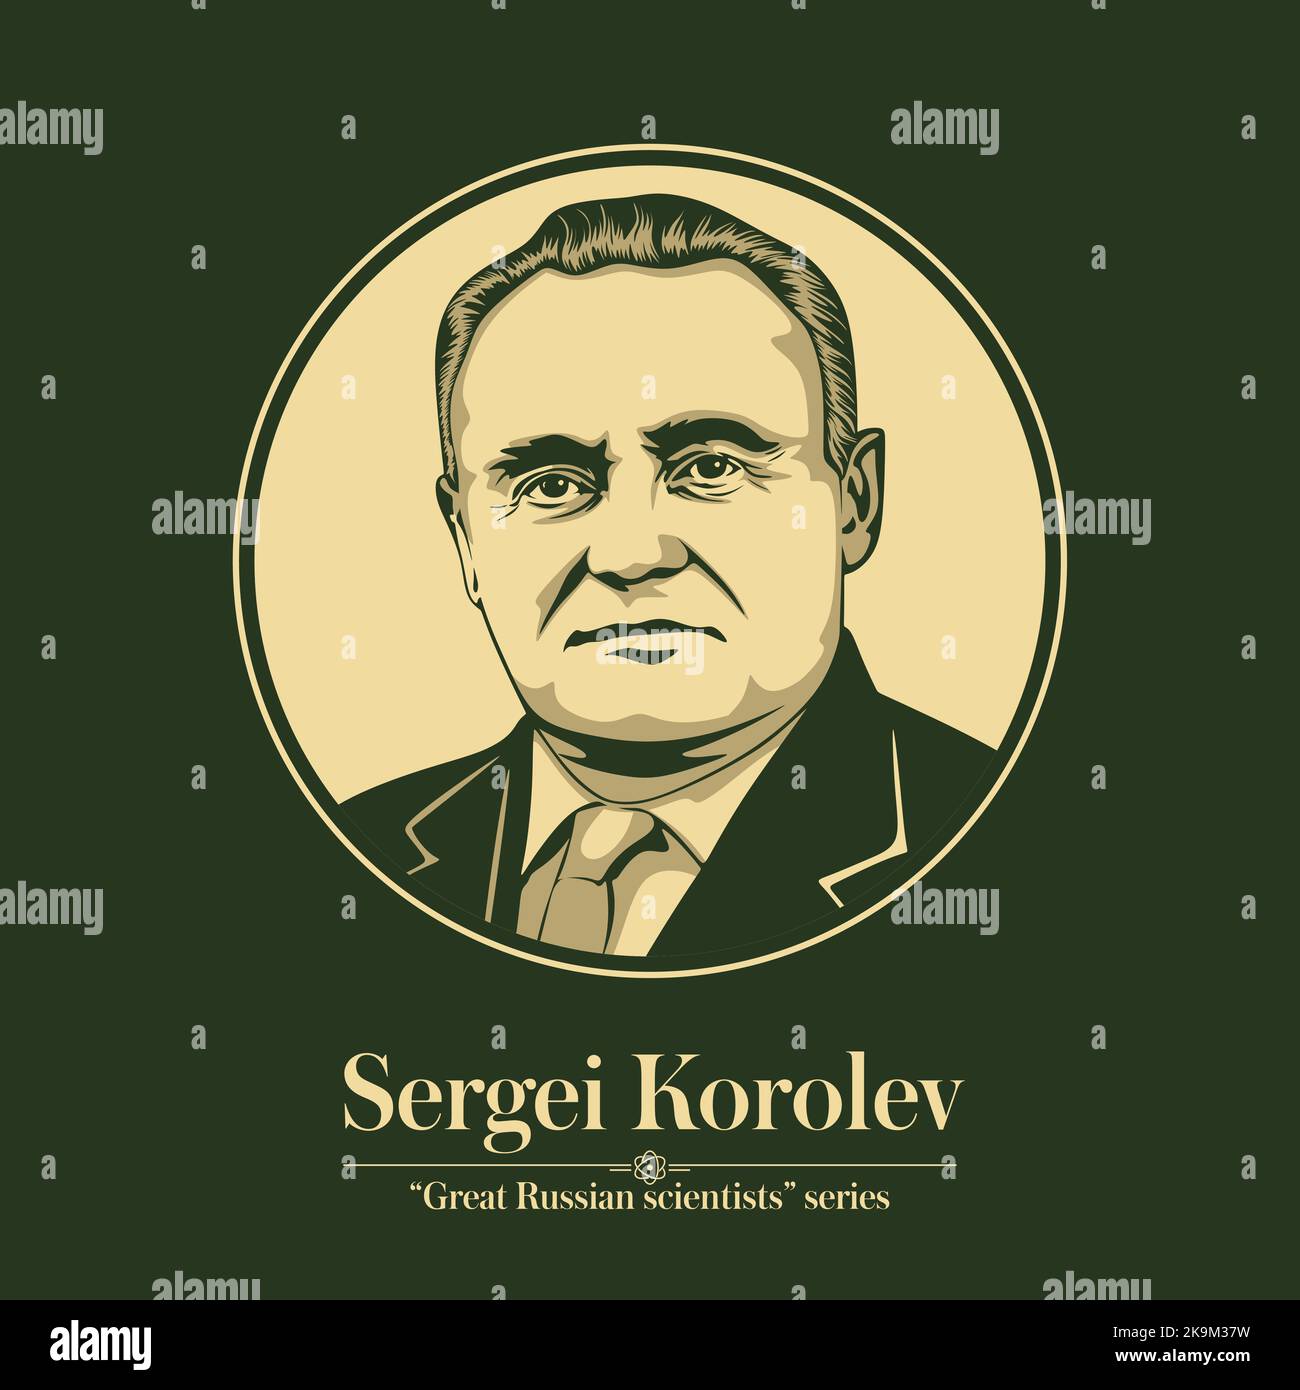 Sergei korolev Stock Vector Images - Alamy